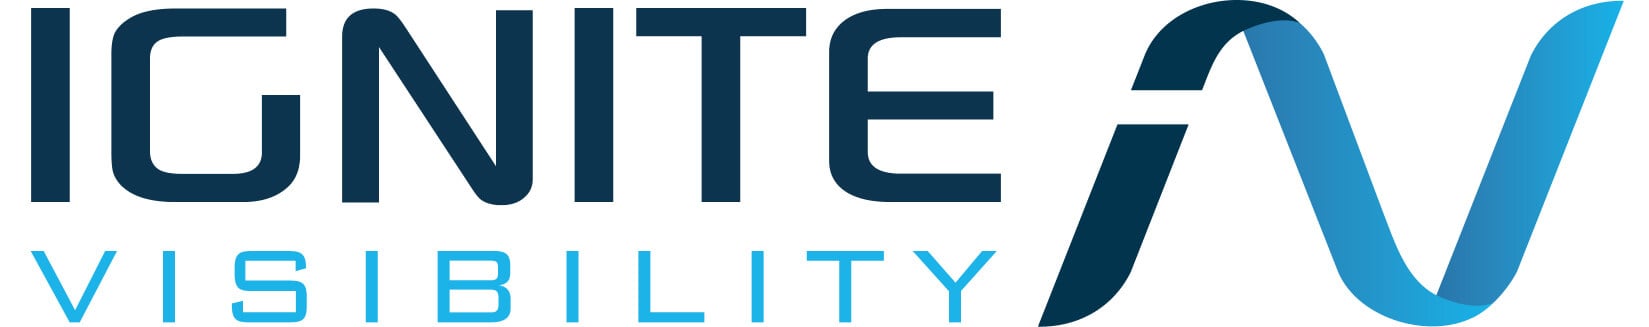 Top Restaurant SEO Company Logo: Ignite Visibility